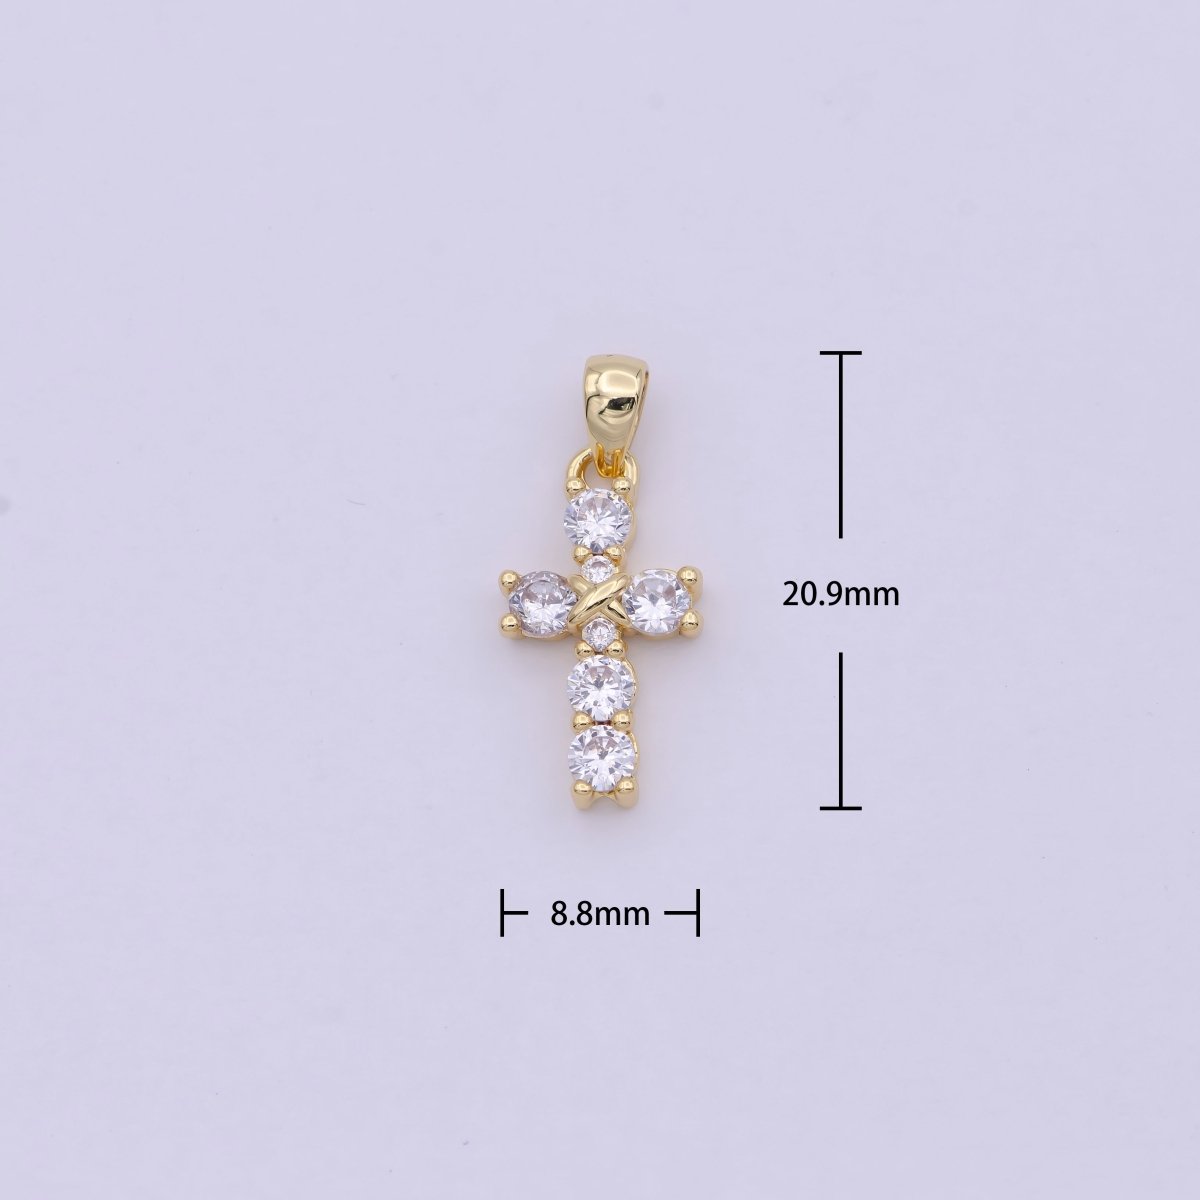 Mini Cross Charm Gold Filled Cross Pendant Add on Charm for Bracelet Necklace Earring H-104 H-106 - DLUXCA